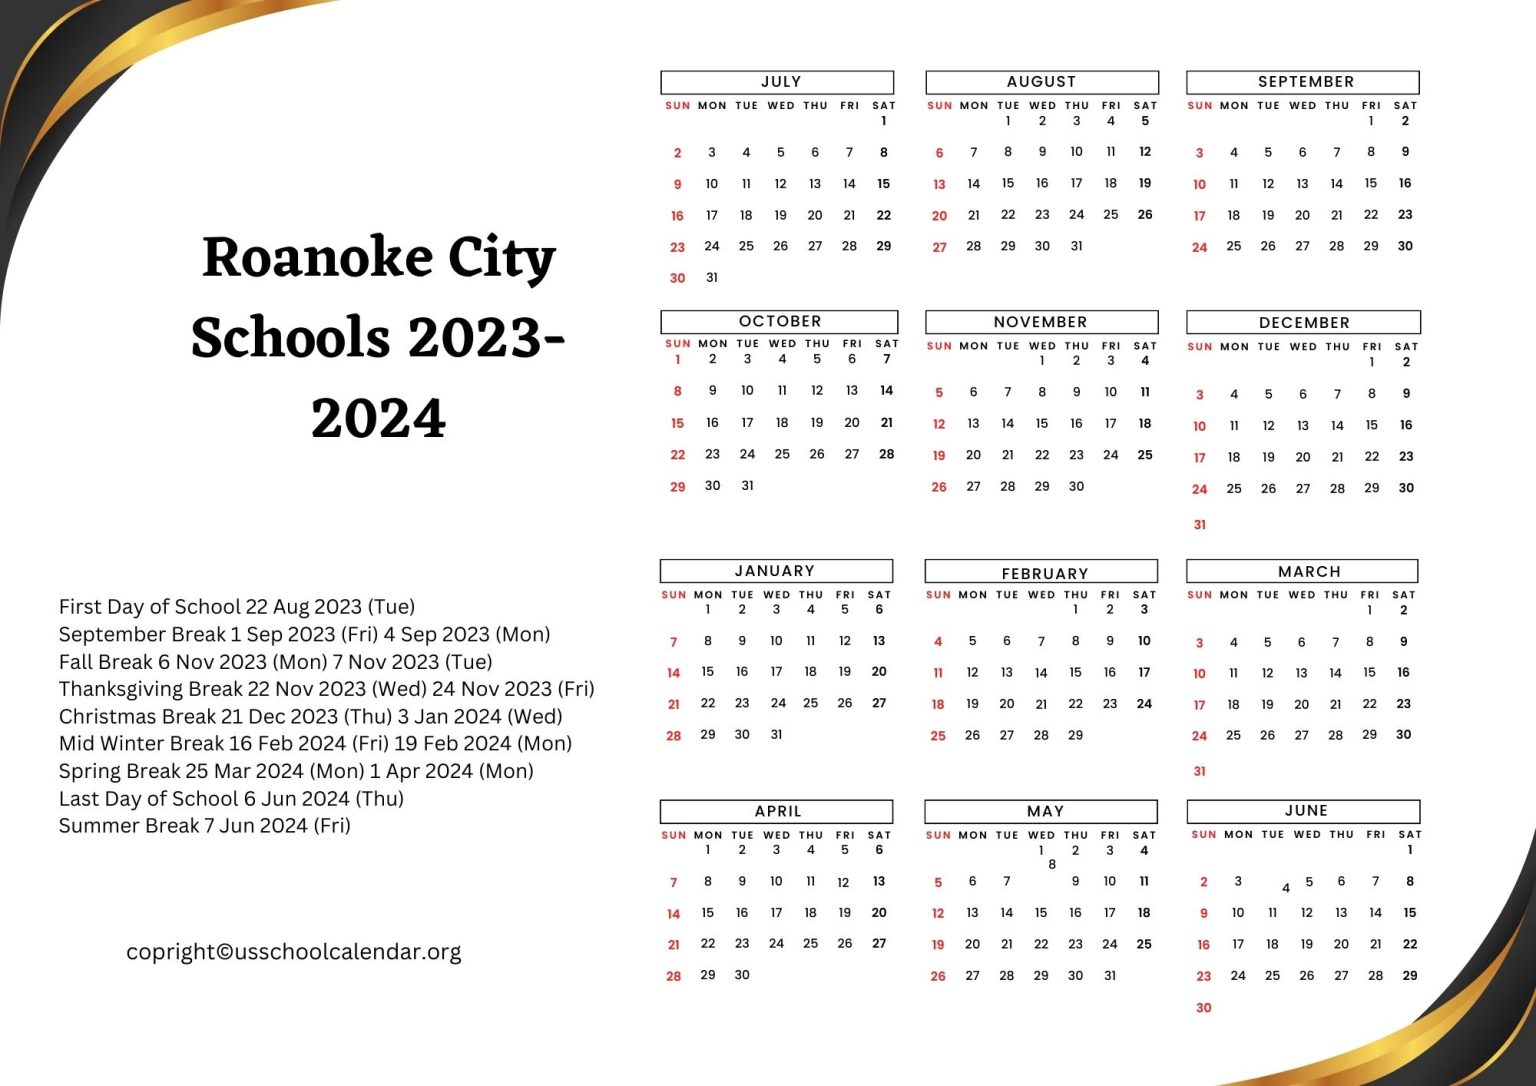 Roanoke City Schools Calendar with Holidays 2023 2024